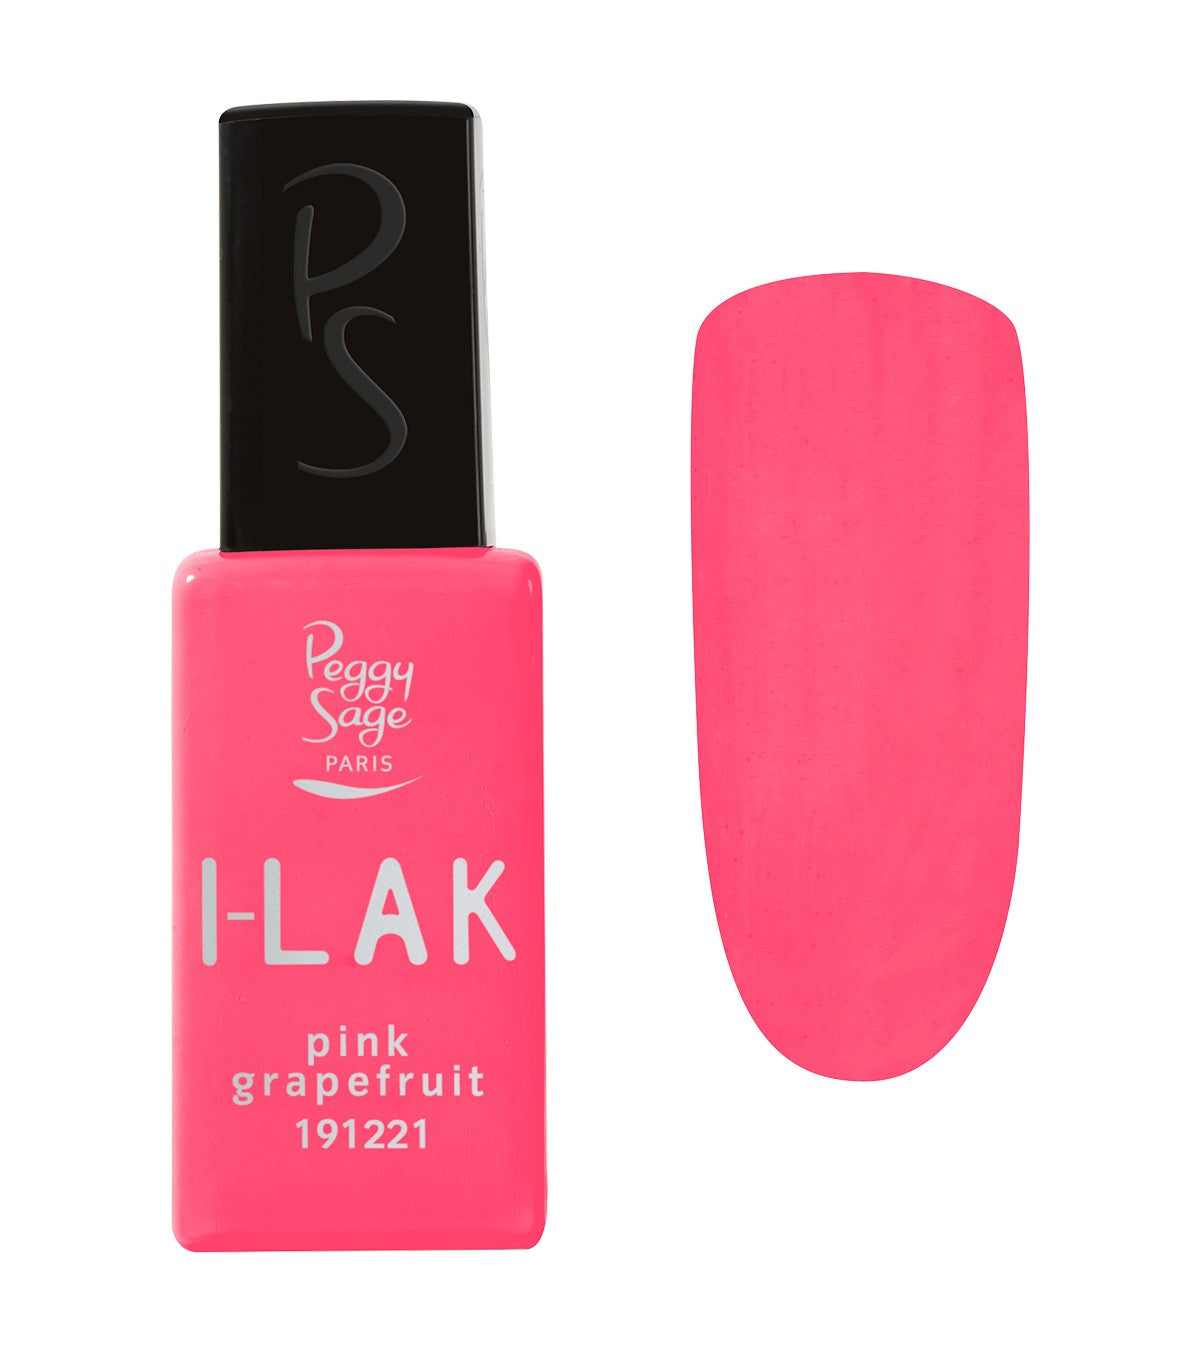 I-LAK Pink Grapefruit Ref 191221